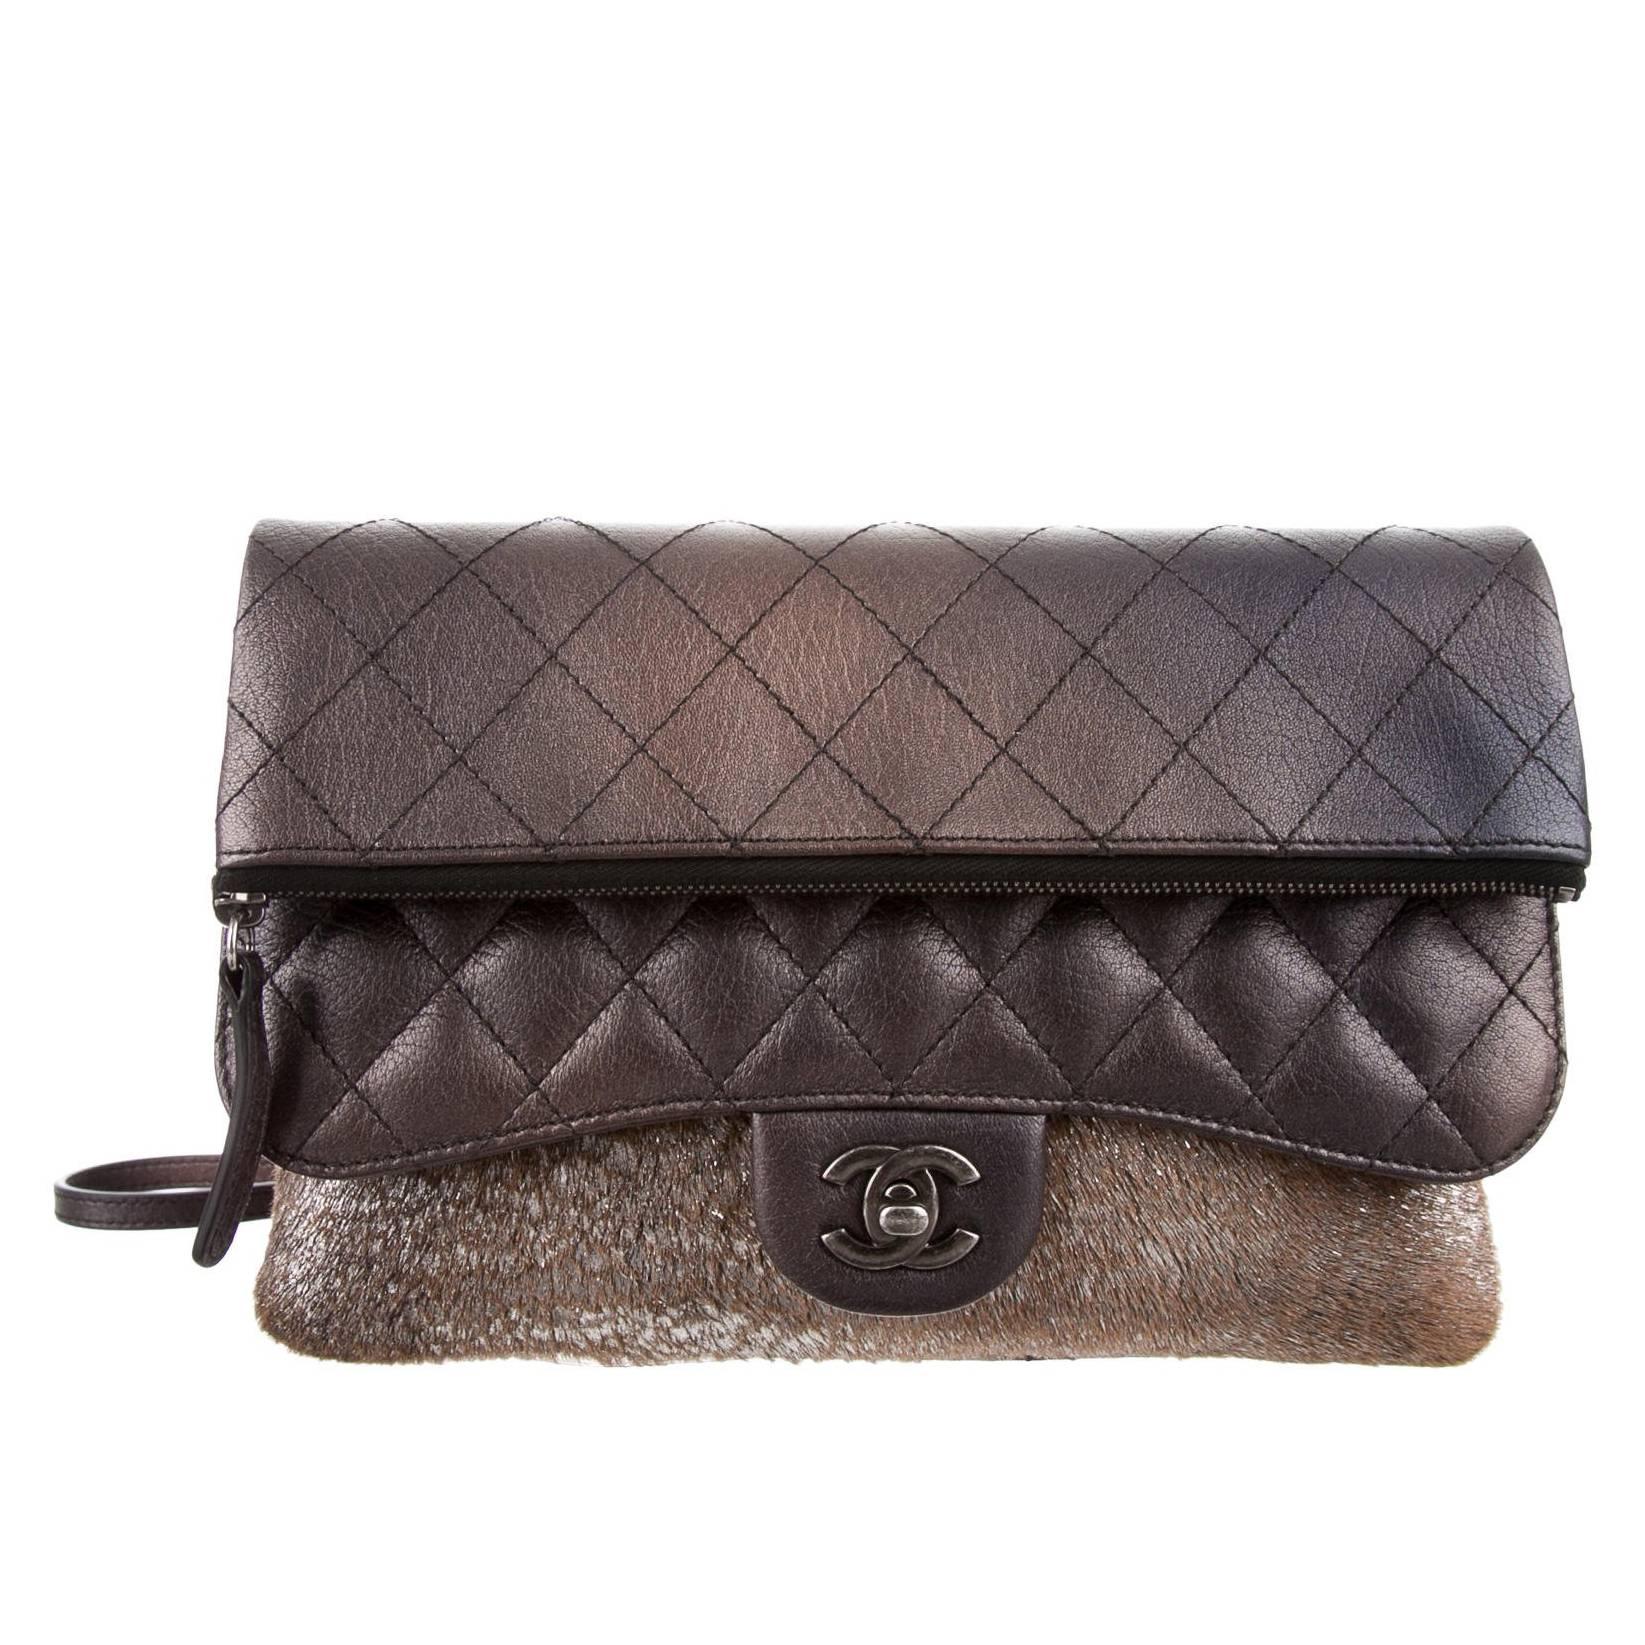 Chanel New Bronze Ombre Leather Pony Envelope Evening Shoulder Flap Bag